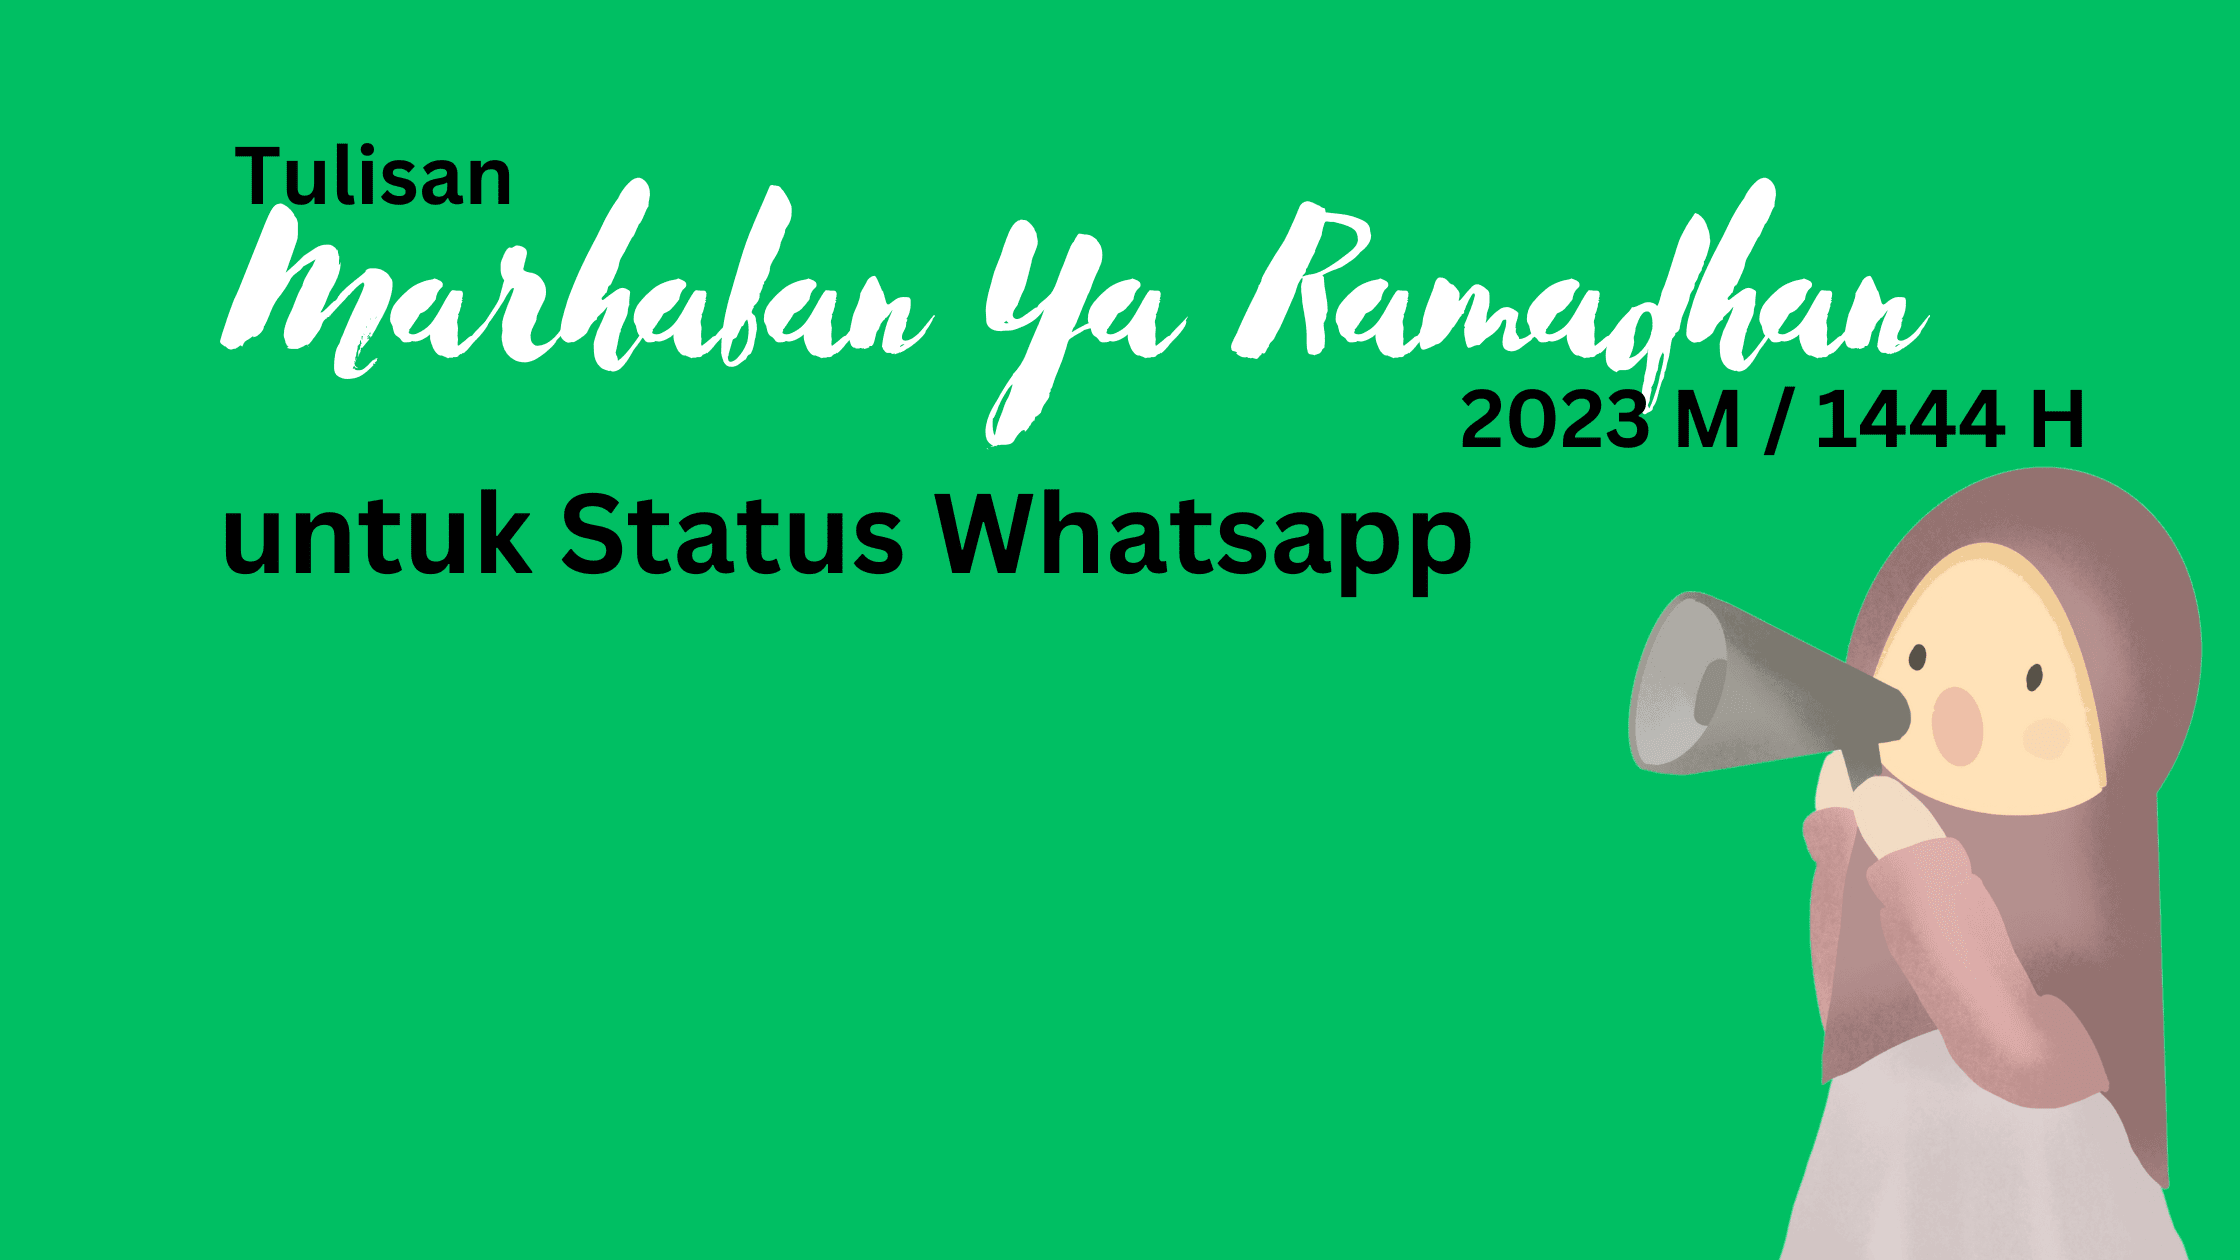 Tulisan Marhaban Ya Ramadhan 2023 M / 1444 H untuk Status Whatsapp